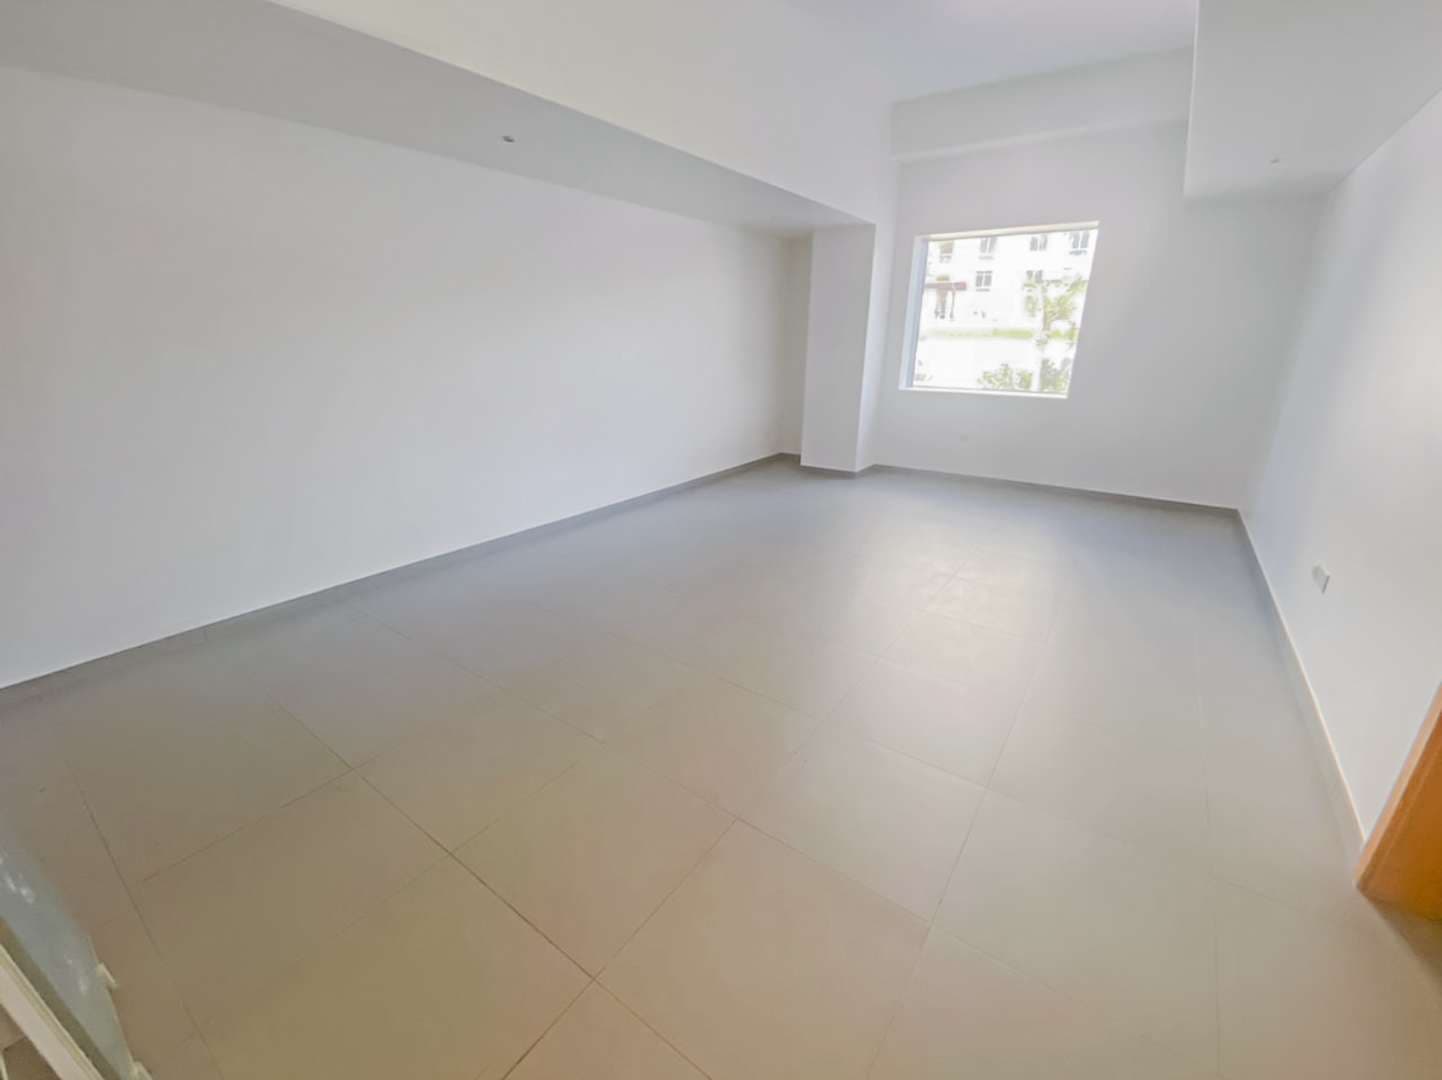 Studio Bedroom Apartment For Rent Ariyana Tower Lp11034 14d7a7dbb975e200.jpg